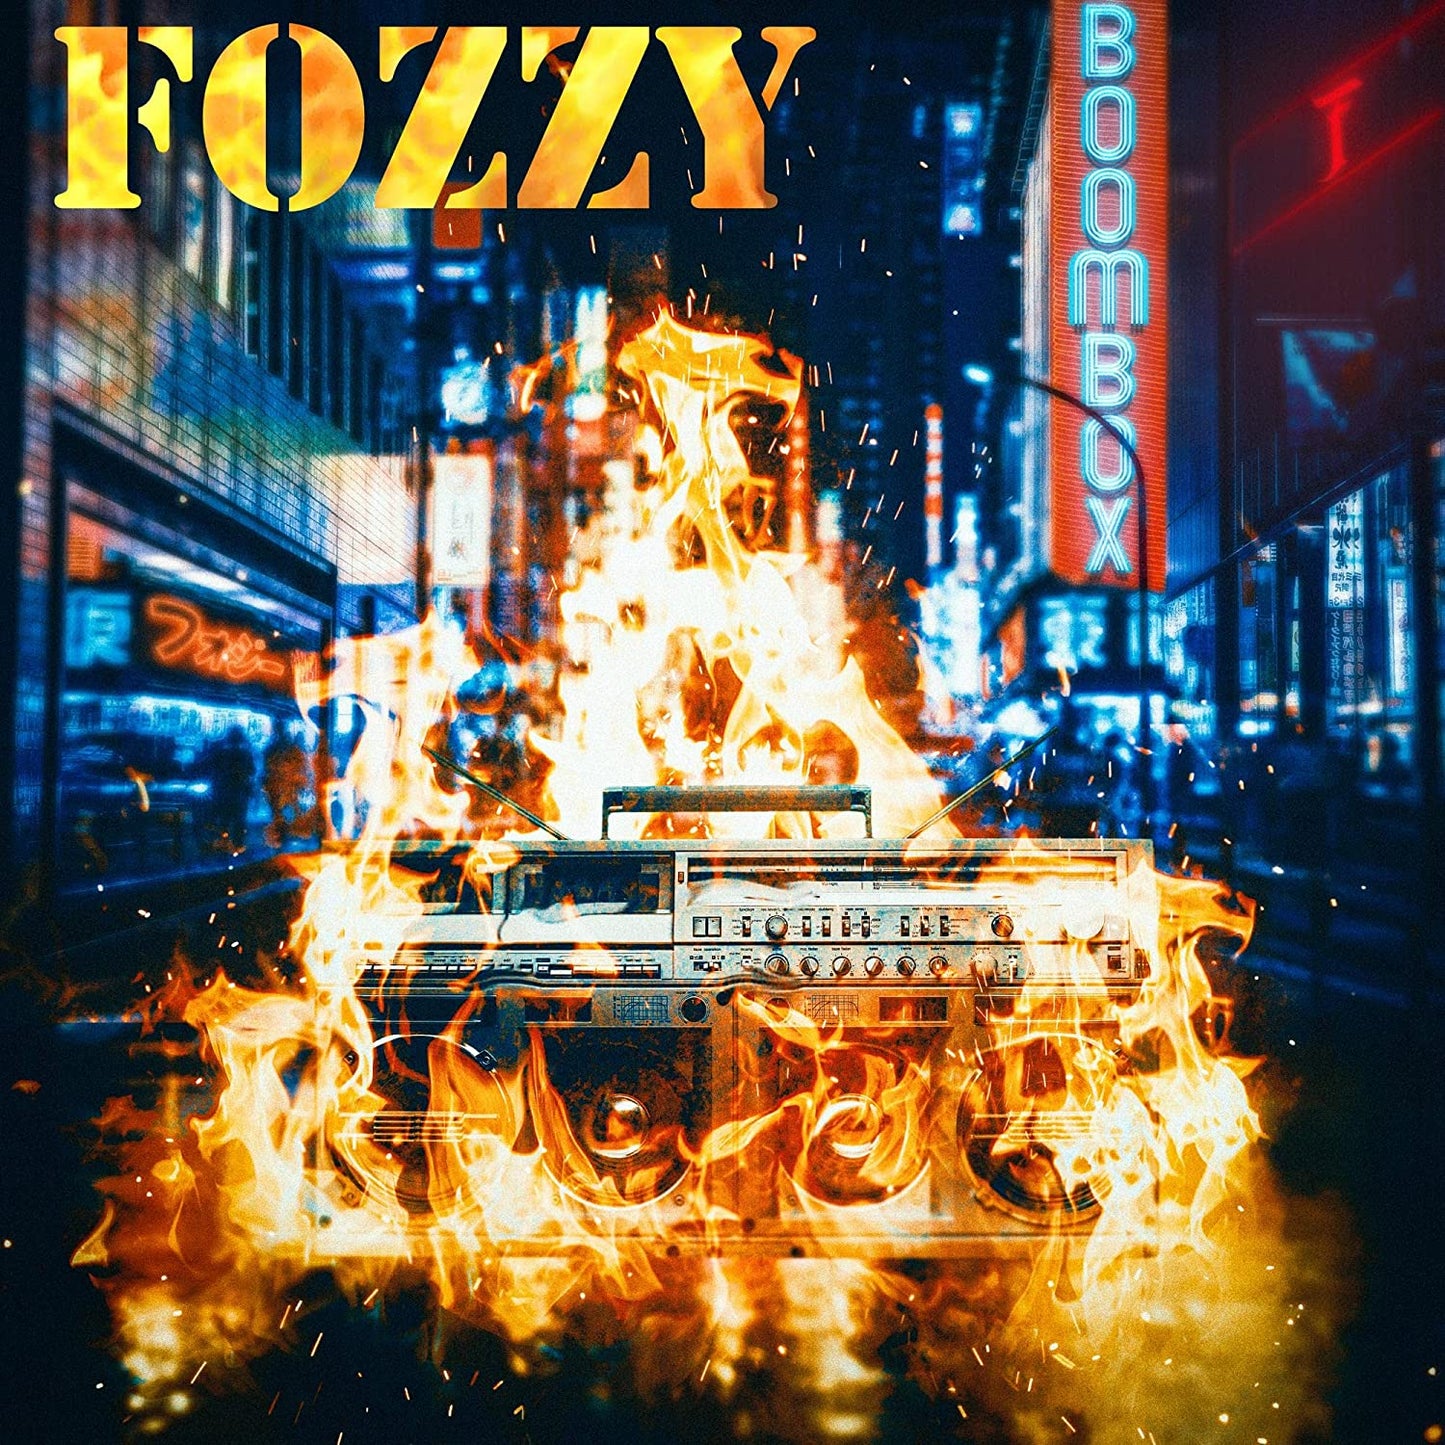 Fozzy - Boombox - CD